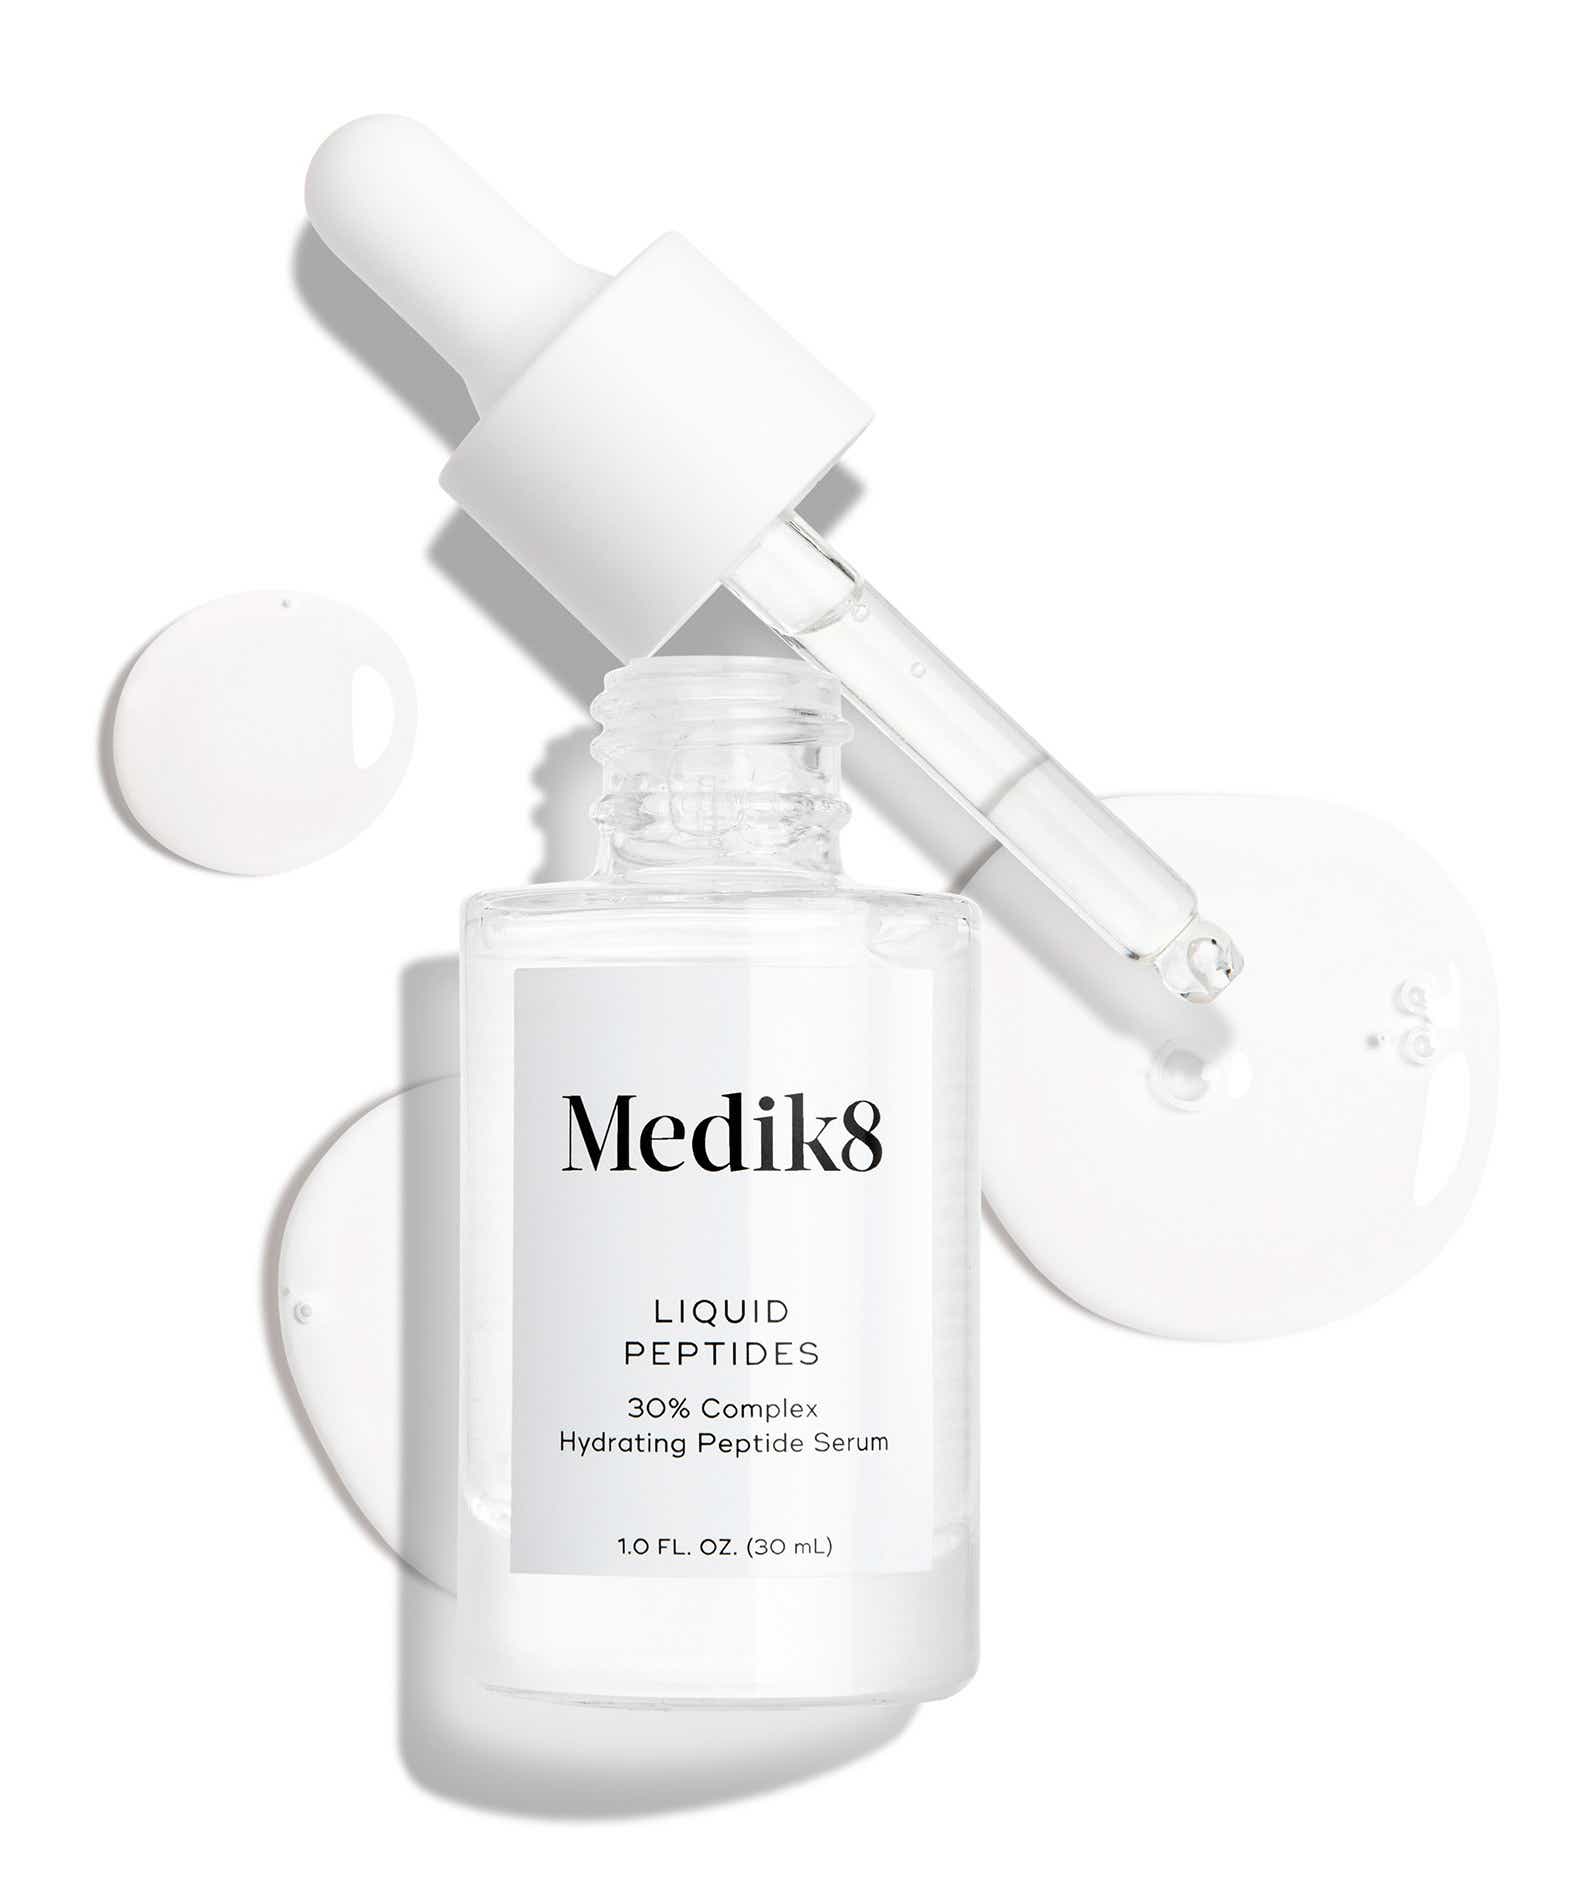 Medik8 Liquid Peptides bottle